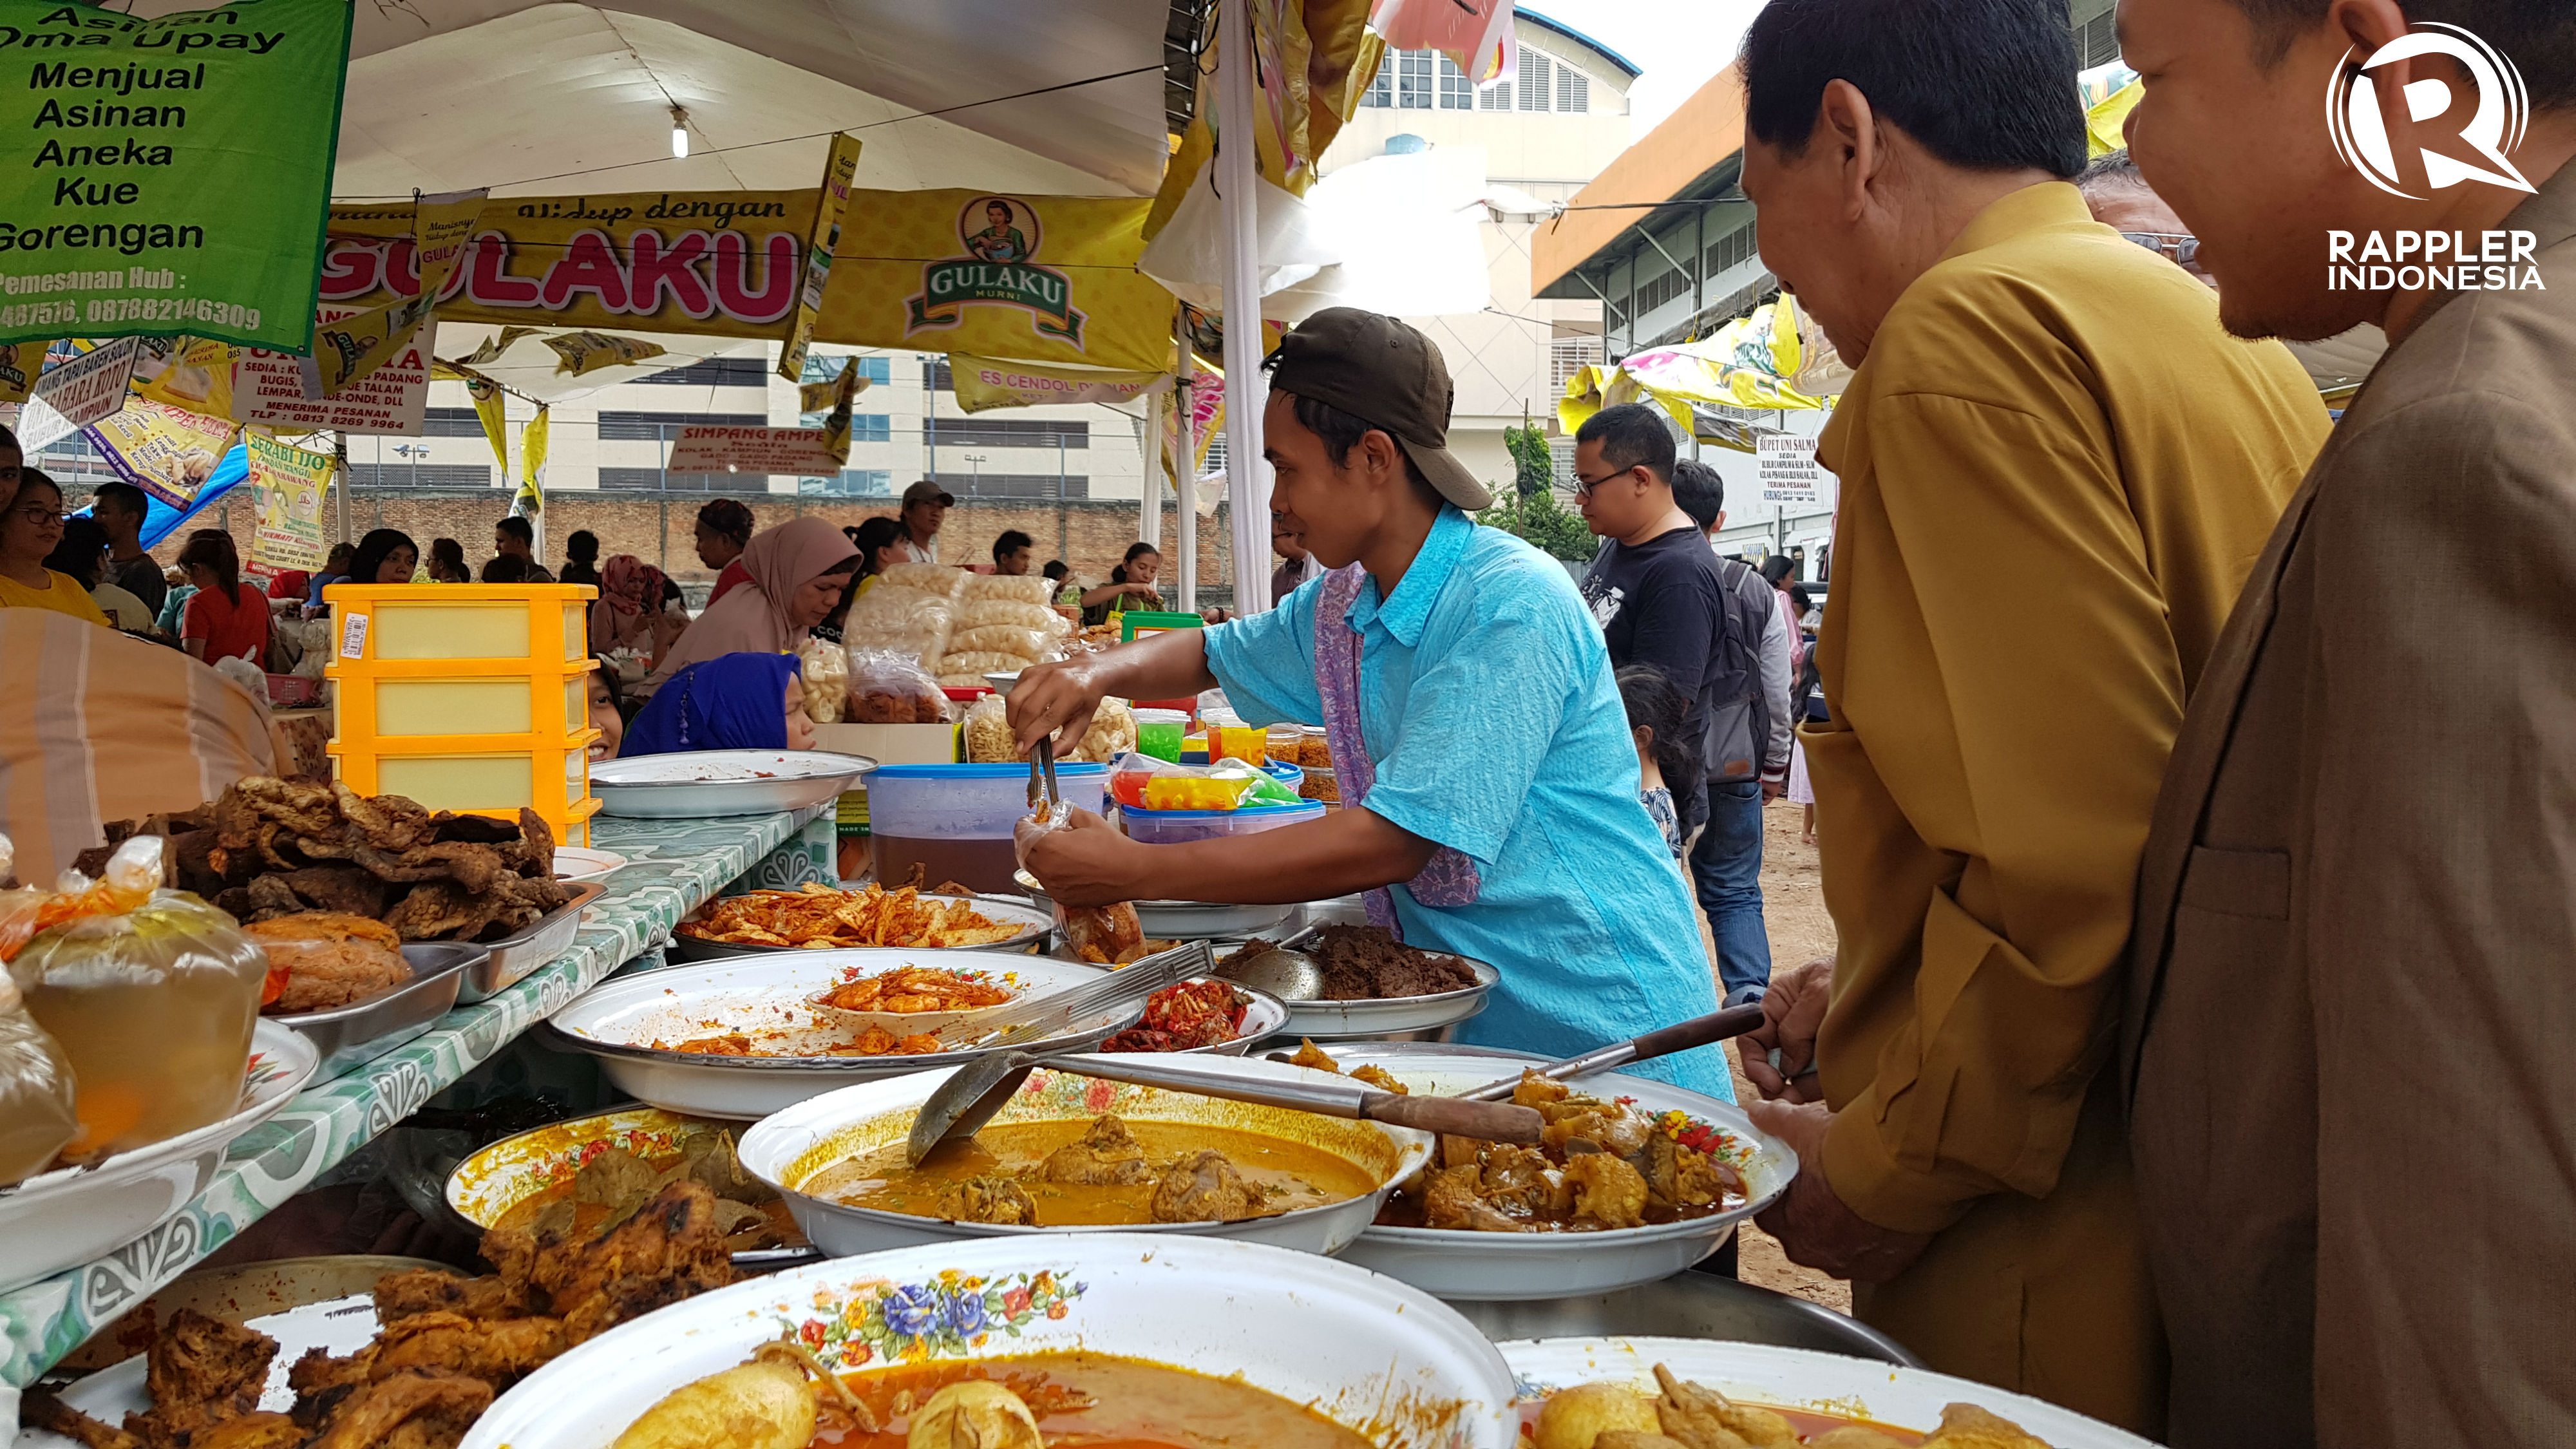 Seorang pedagang sedang melayani pengunjung yang membeli lauk untuk berbuka puasa. Foto oleh Sakinah Ummu Haniy/Rappler 